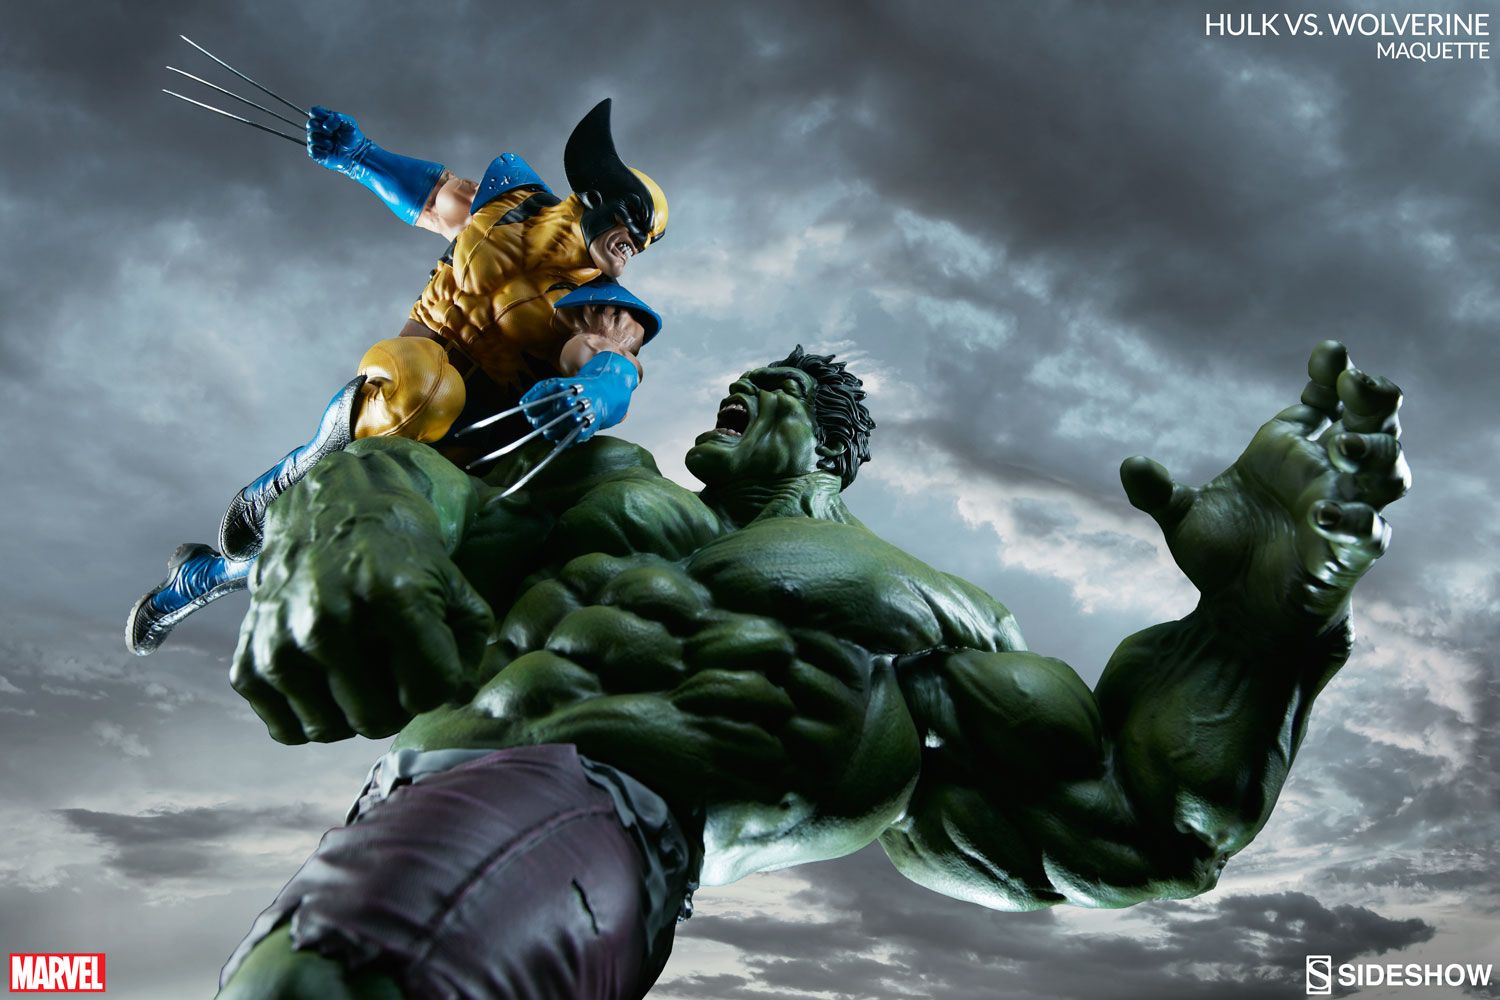 Marvel Hulk Vs Wolverine Maquette 200216 16 Venganza Media Gazette